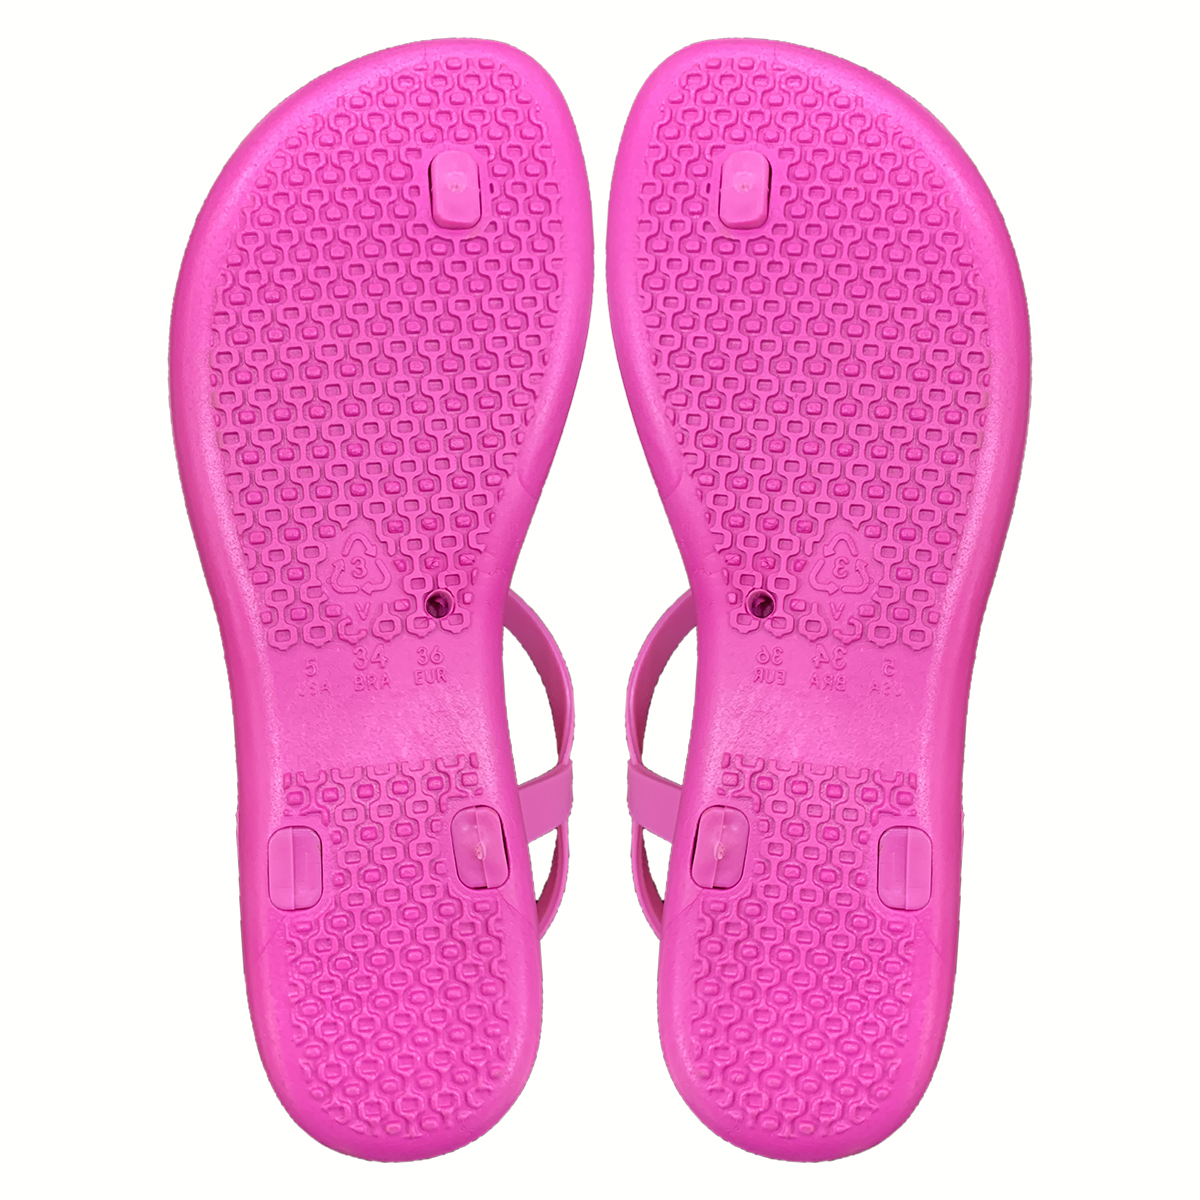 Pvc Women'S Shoes Y-Shaped Beach European Style Plastic Flat Heel Fashion Sandals